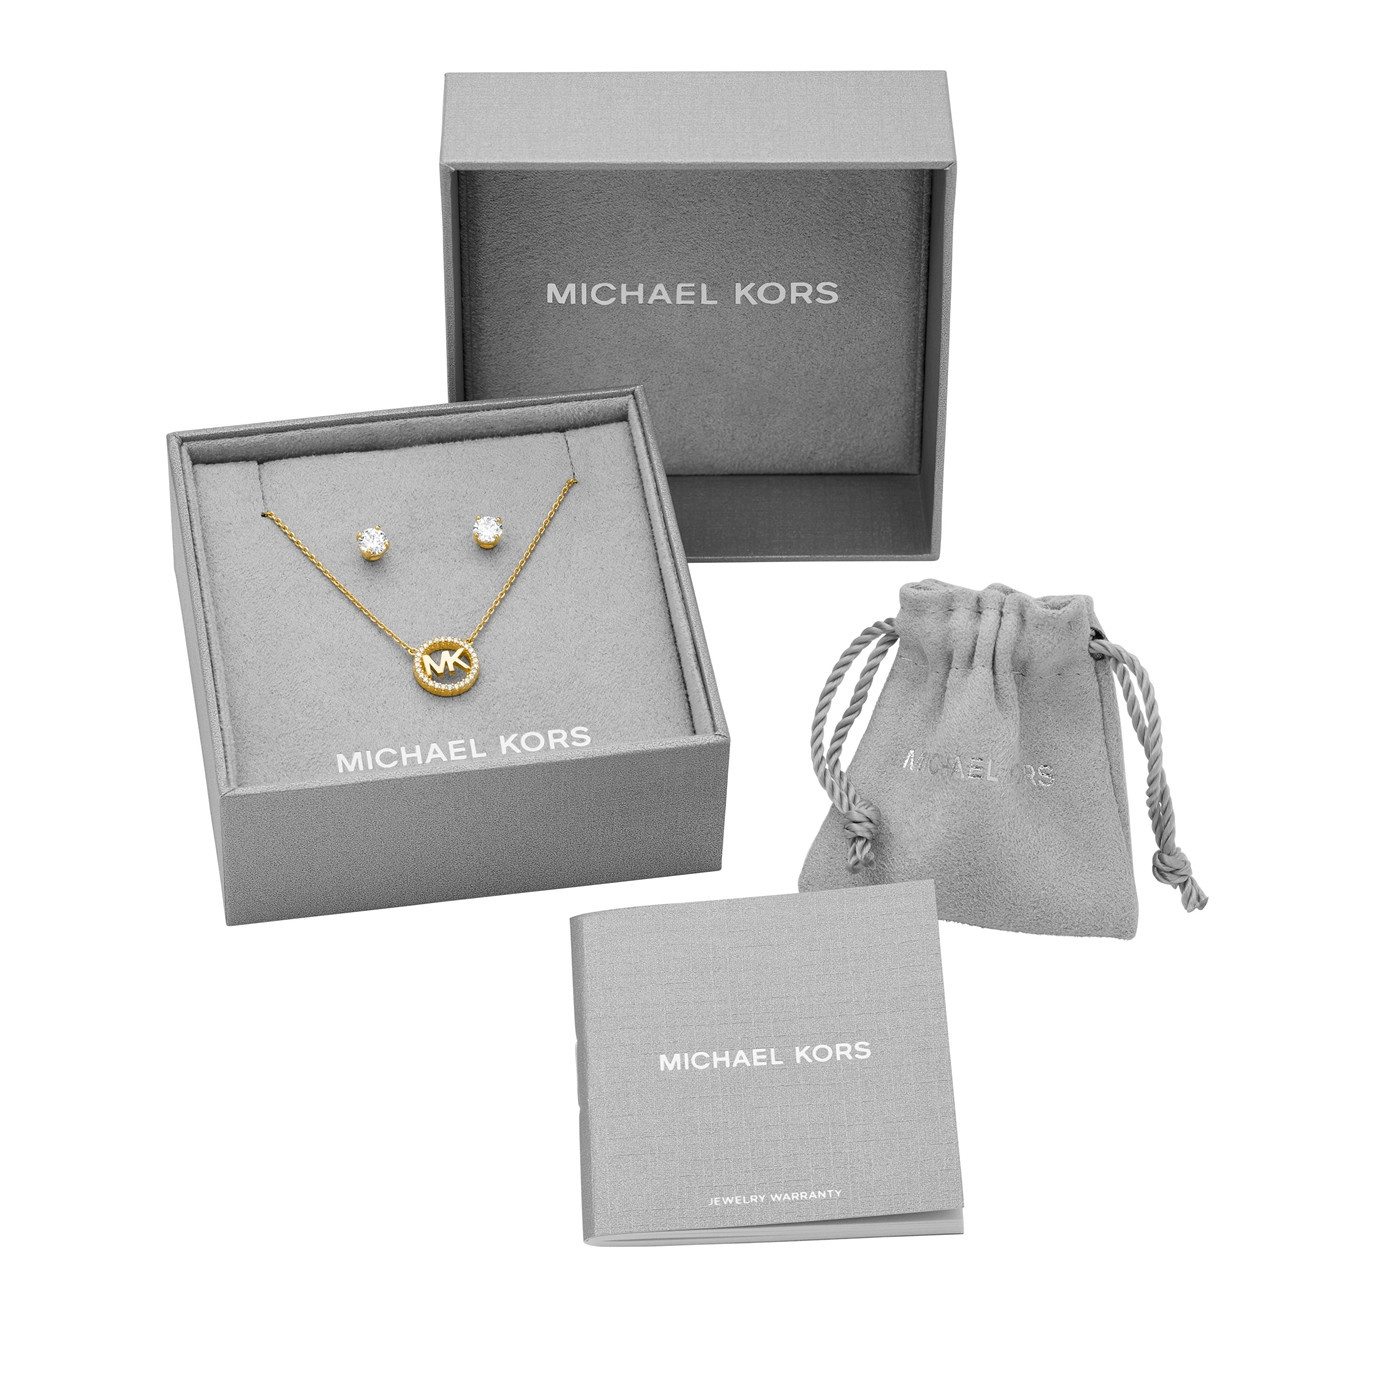 NWT Michael Kors Jewelry Case  Michael kors jewelry Jewelry case Michael  kors